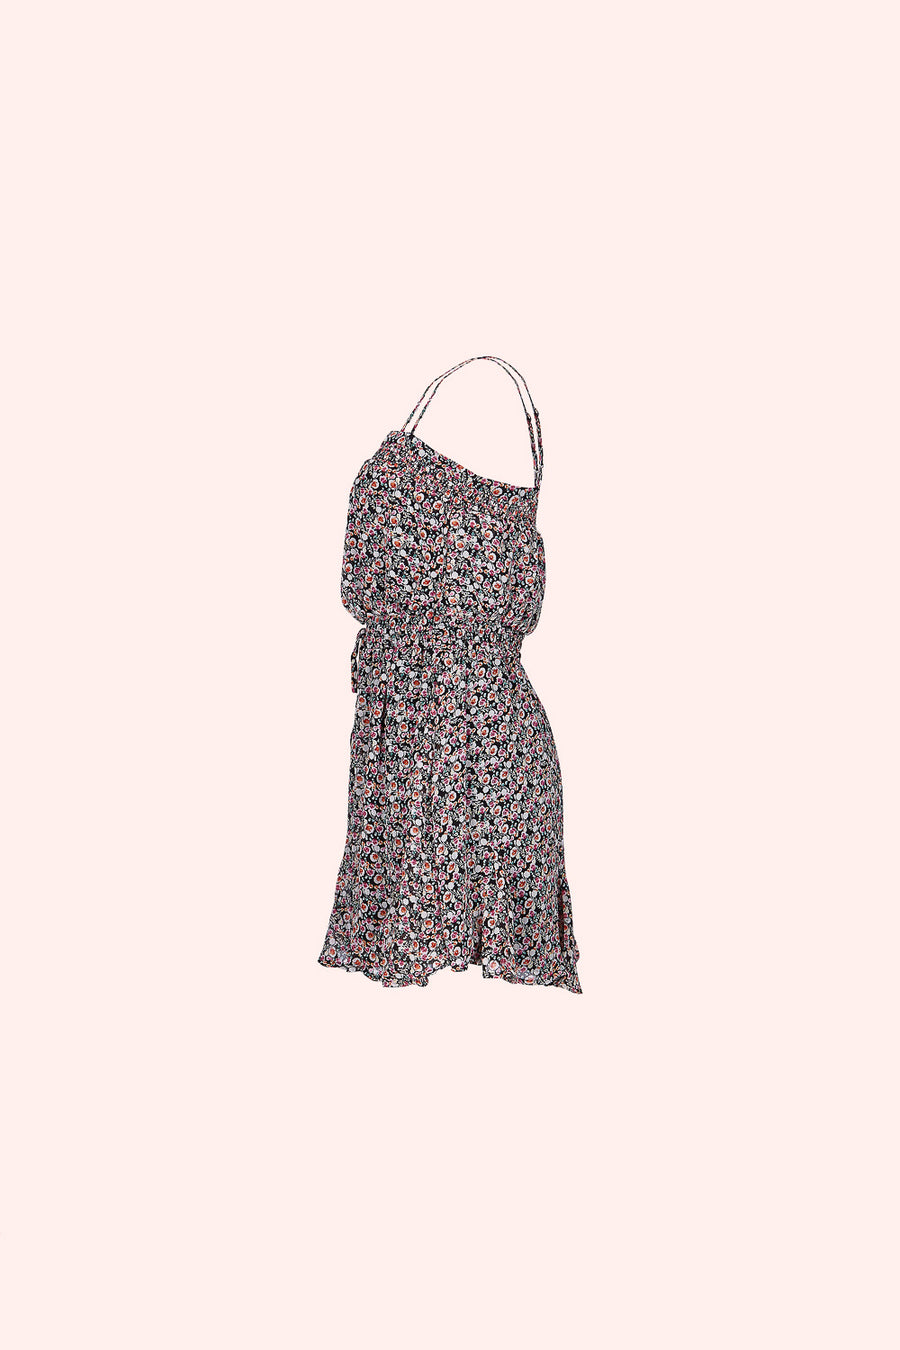 Black Floral Cami Dress - Trixxi Clothing